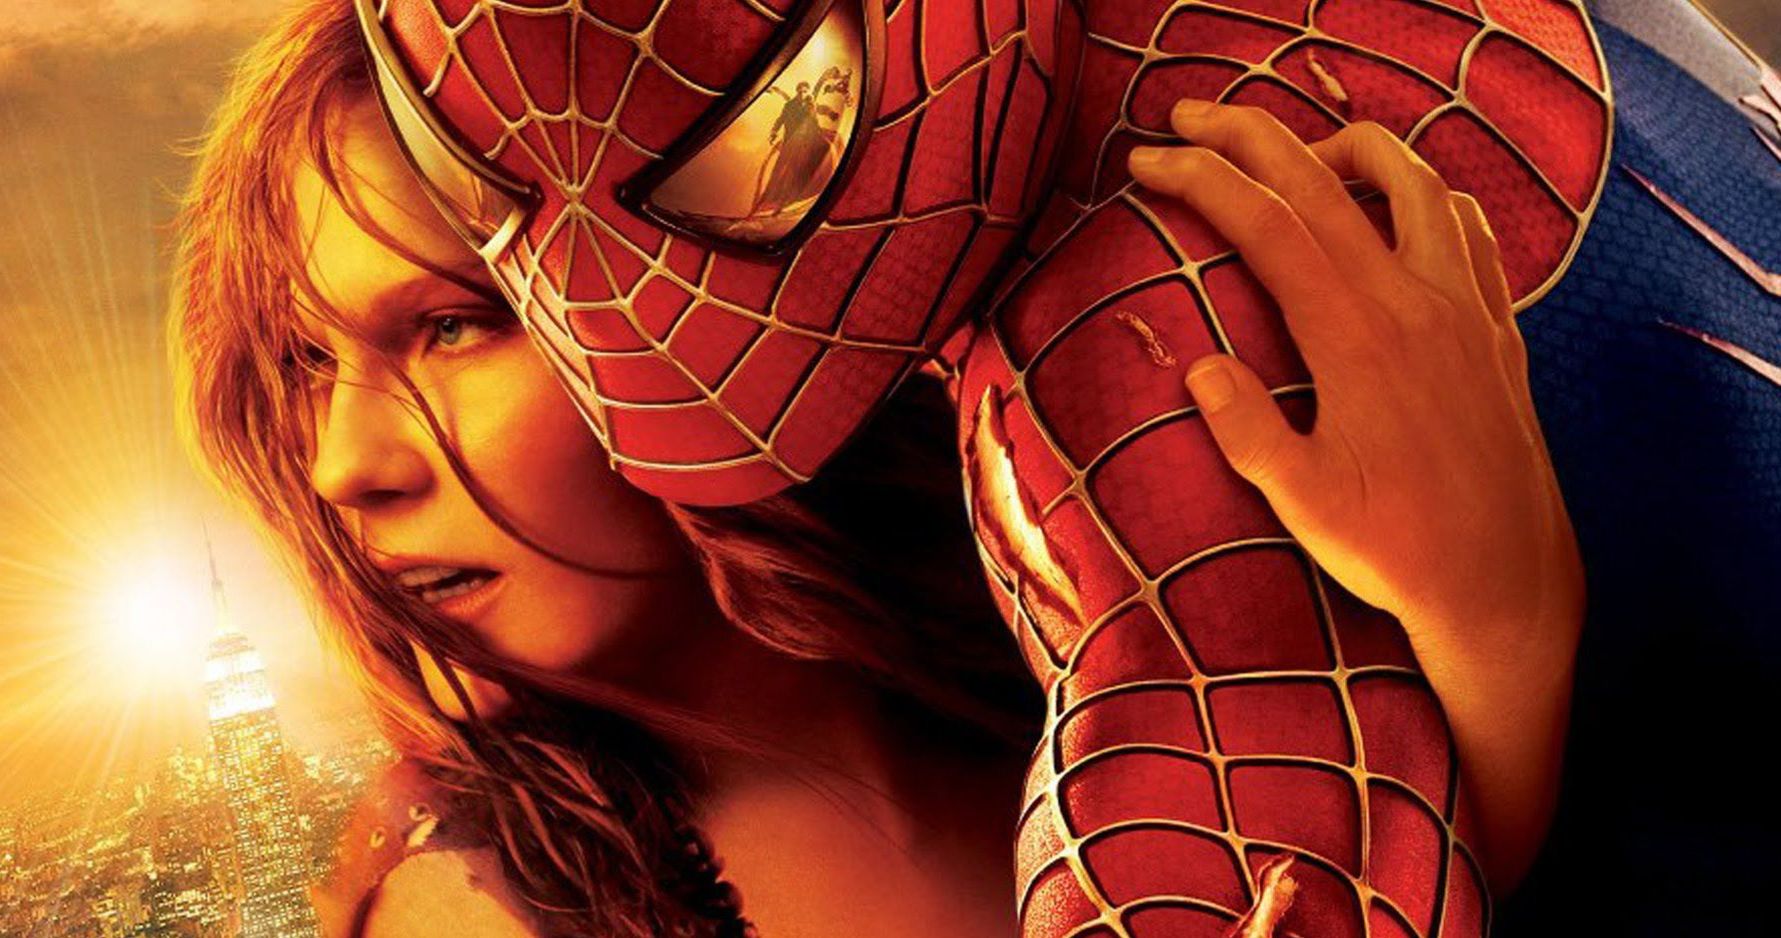 Tobey Maguire & Kirsten Dunst Confirmed for Spider-Man 3?